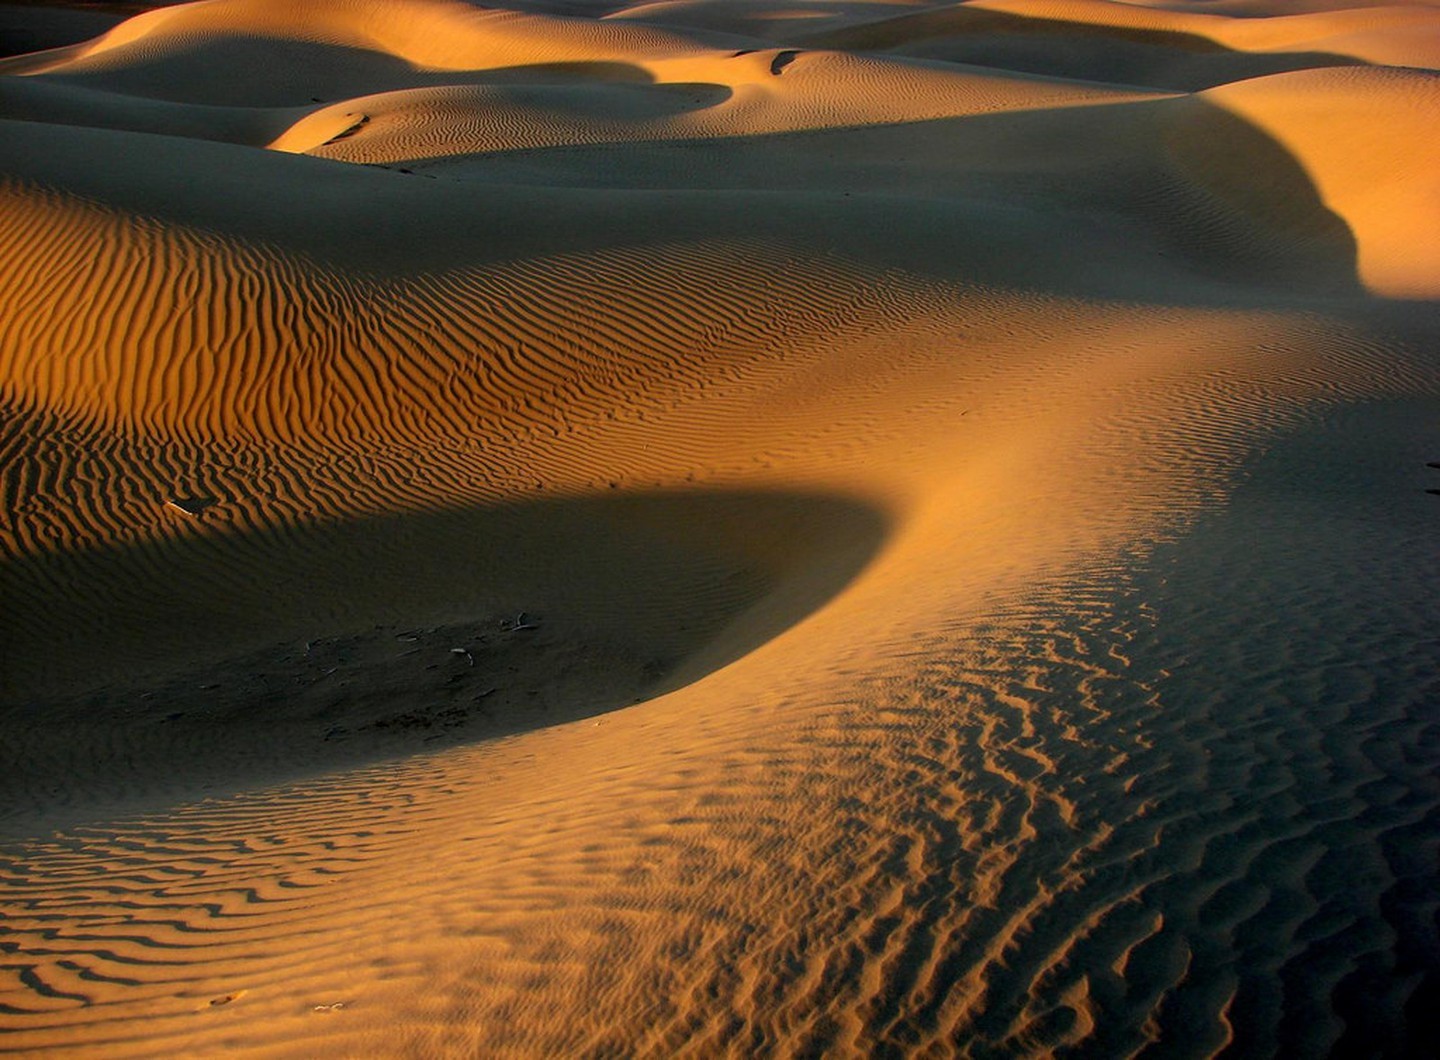 Thar Desert – India/Pakistan